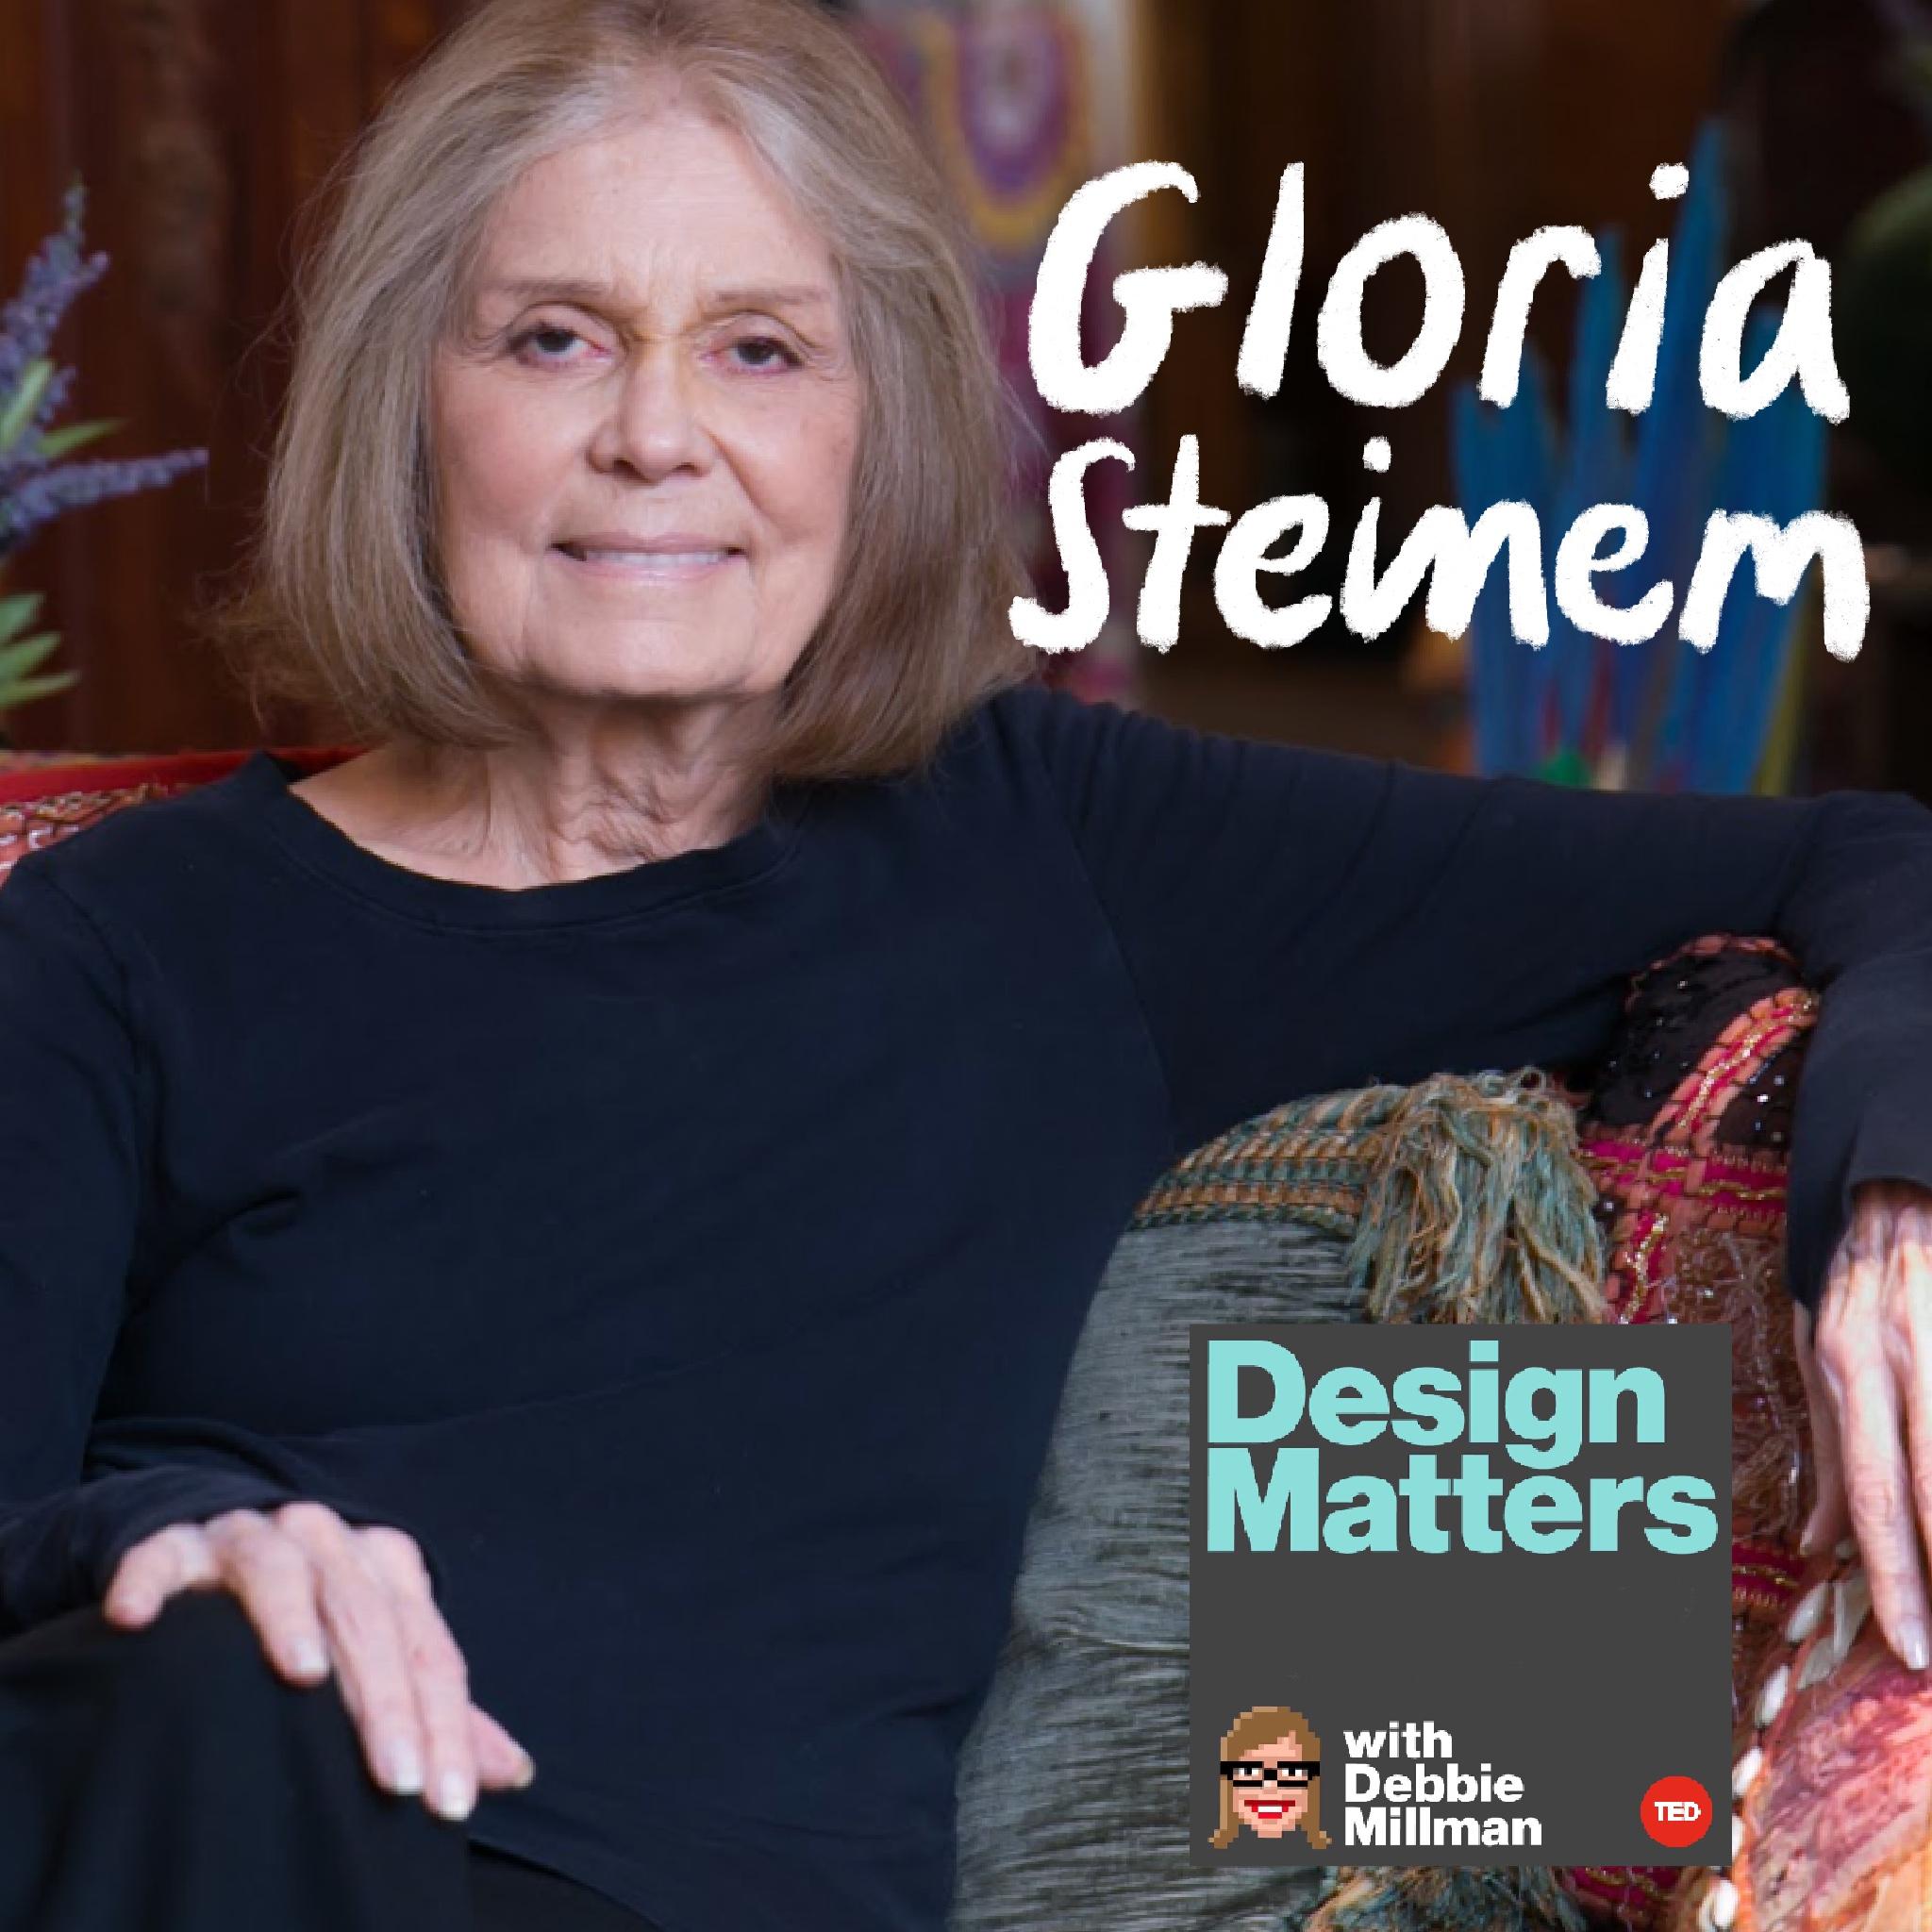 Thumbnail for "Gloria Steinem".